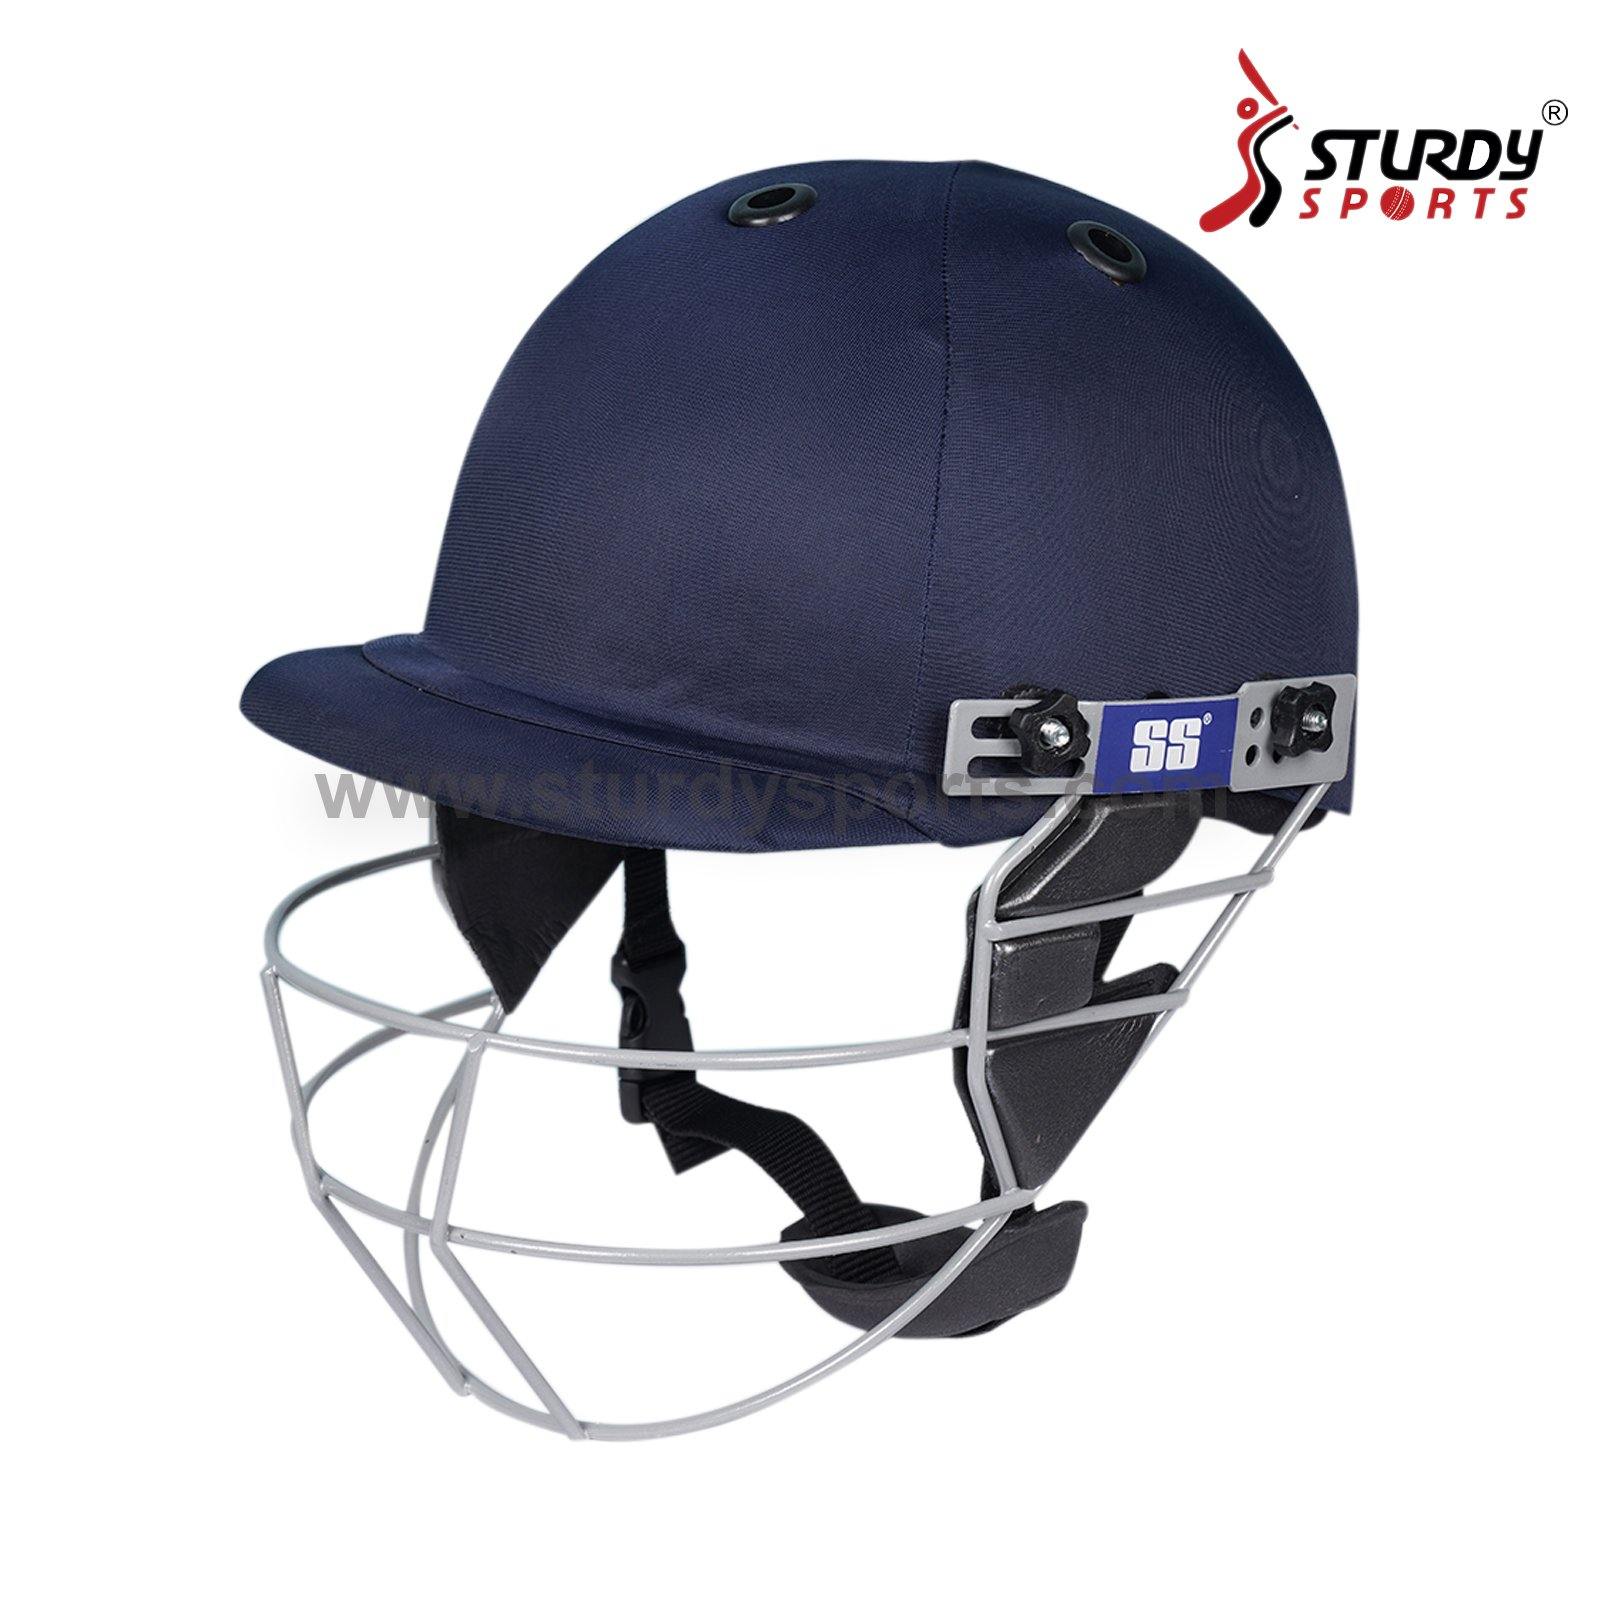 SS Heritage Cricket Helmet - Senior